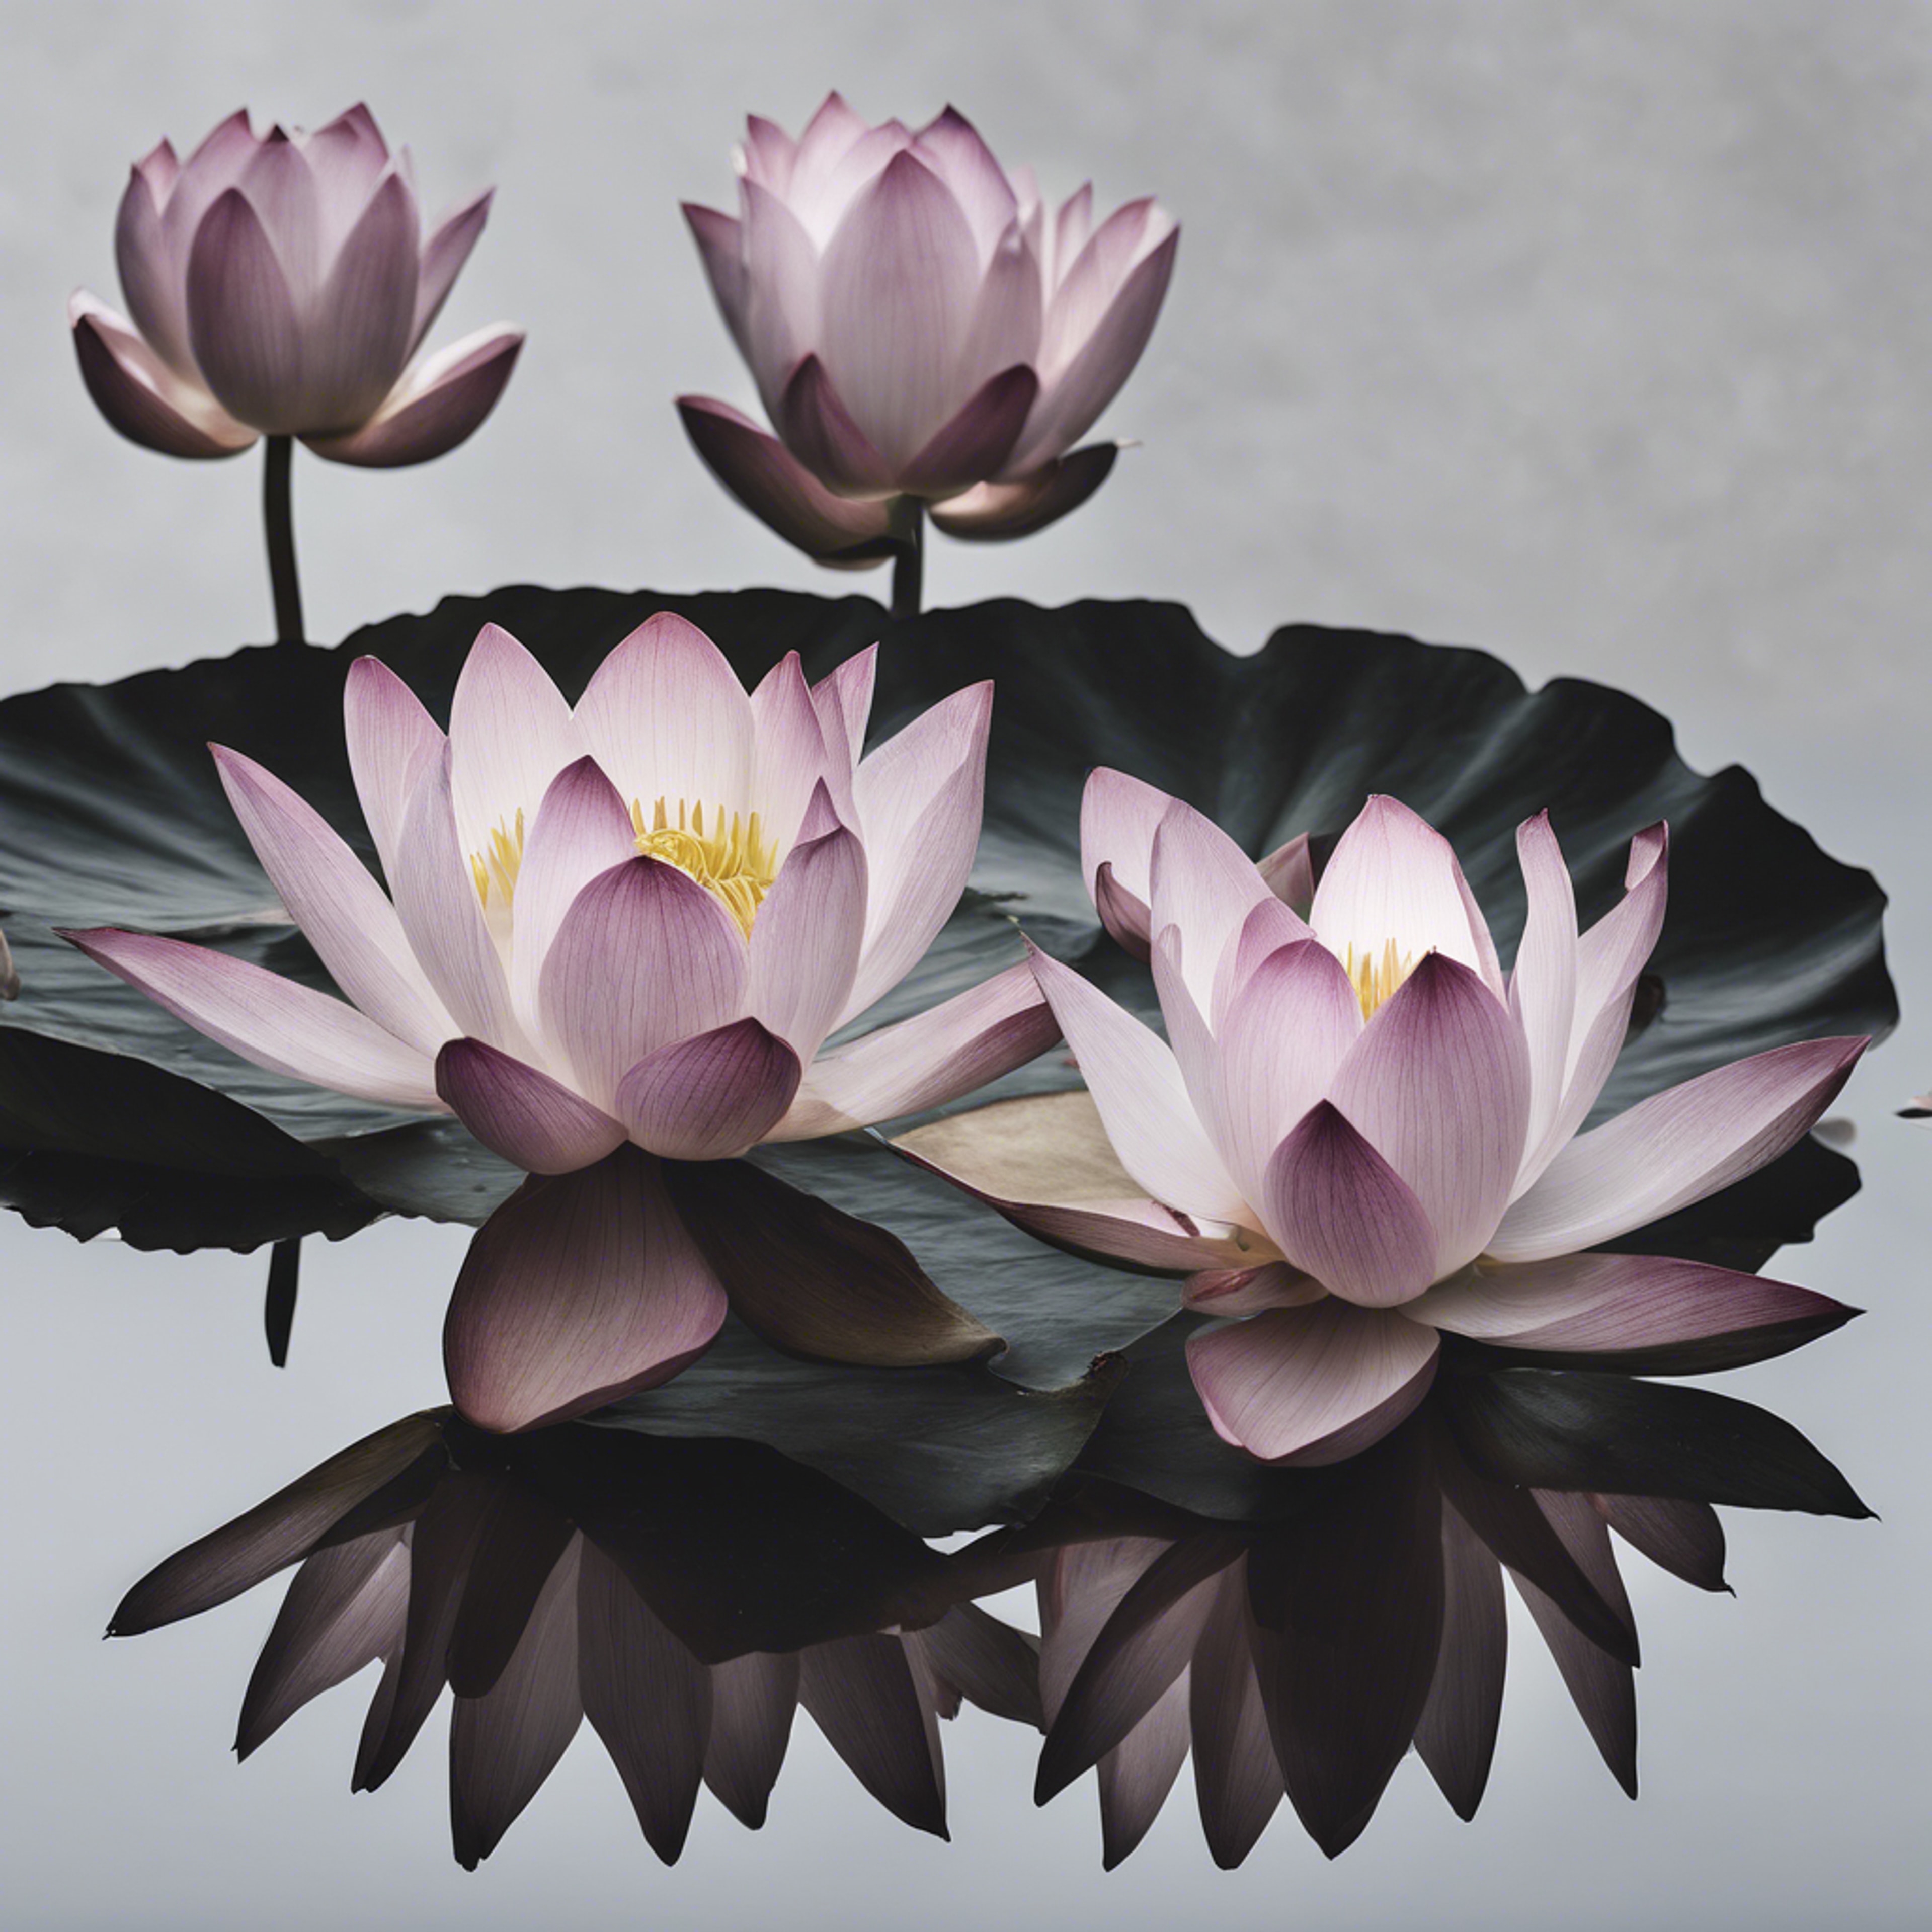 Dark lotuses floating elegantly on a textured white canvas. Обои[326d2c6a66b946e99dbc]